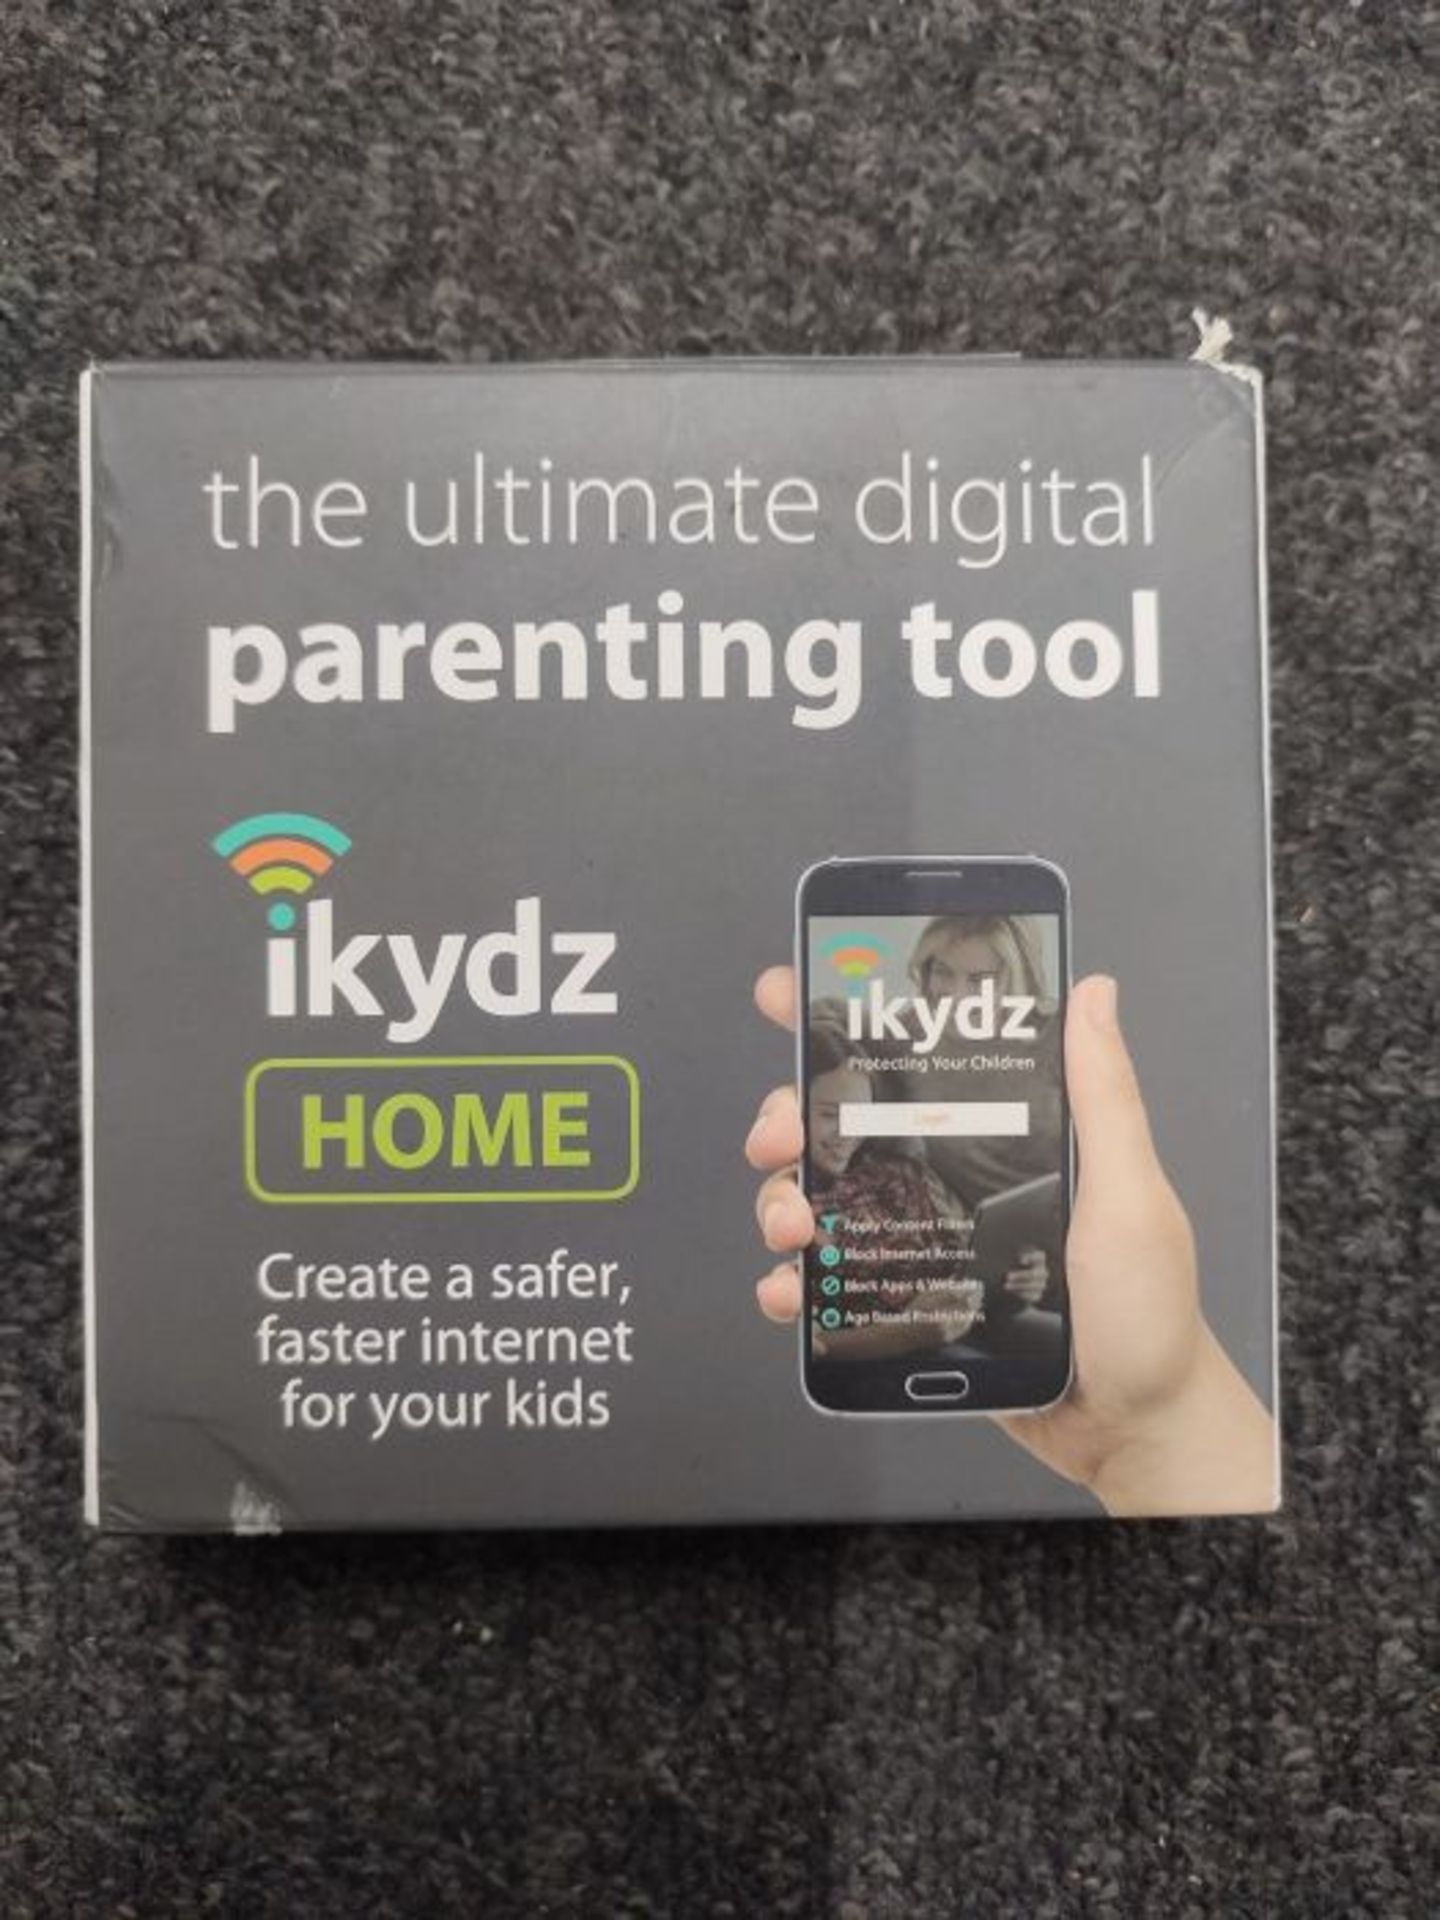 iKydz Home Parental Controls | Parental Control Router - Image 2 of 6